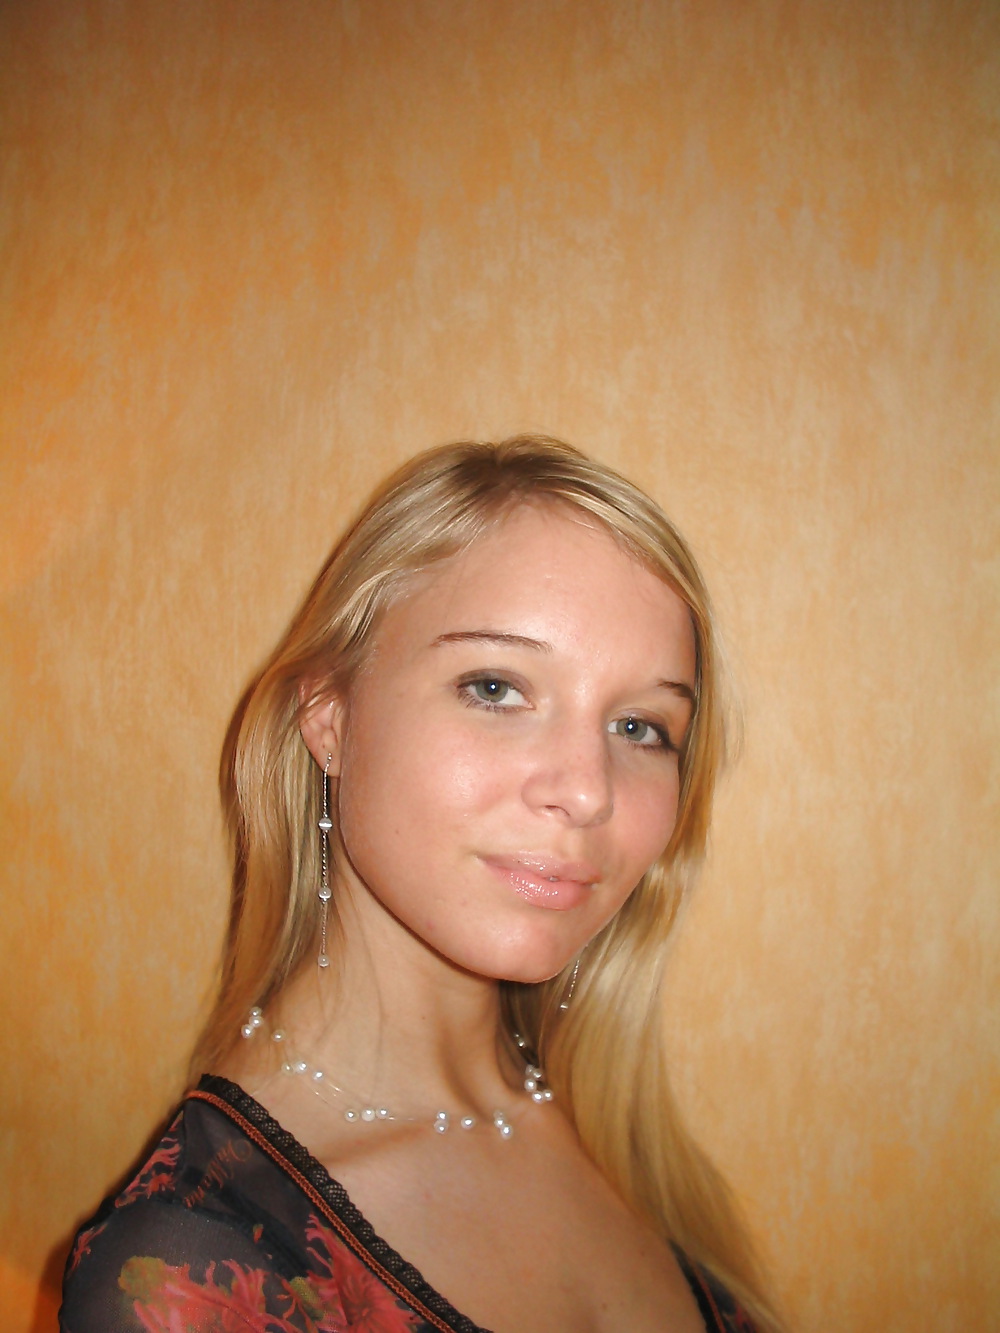 Sexy Blonde German Teen Poses In Lingerie #24813777